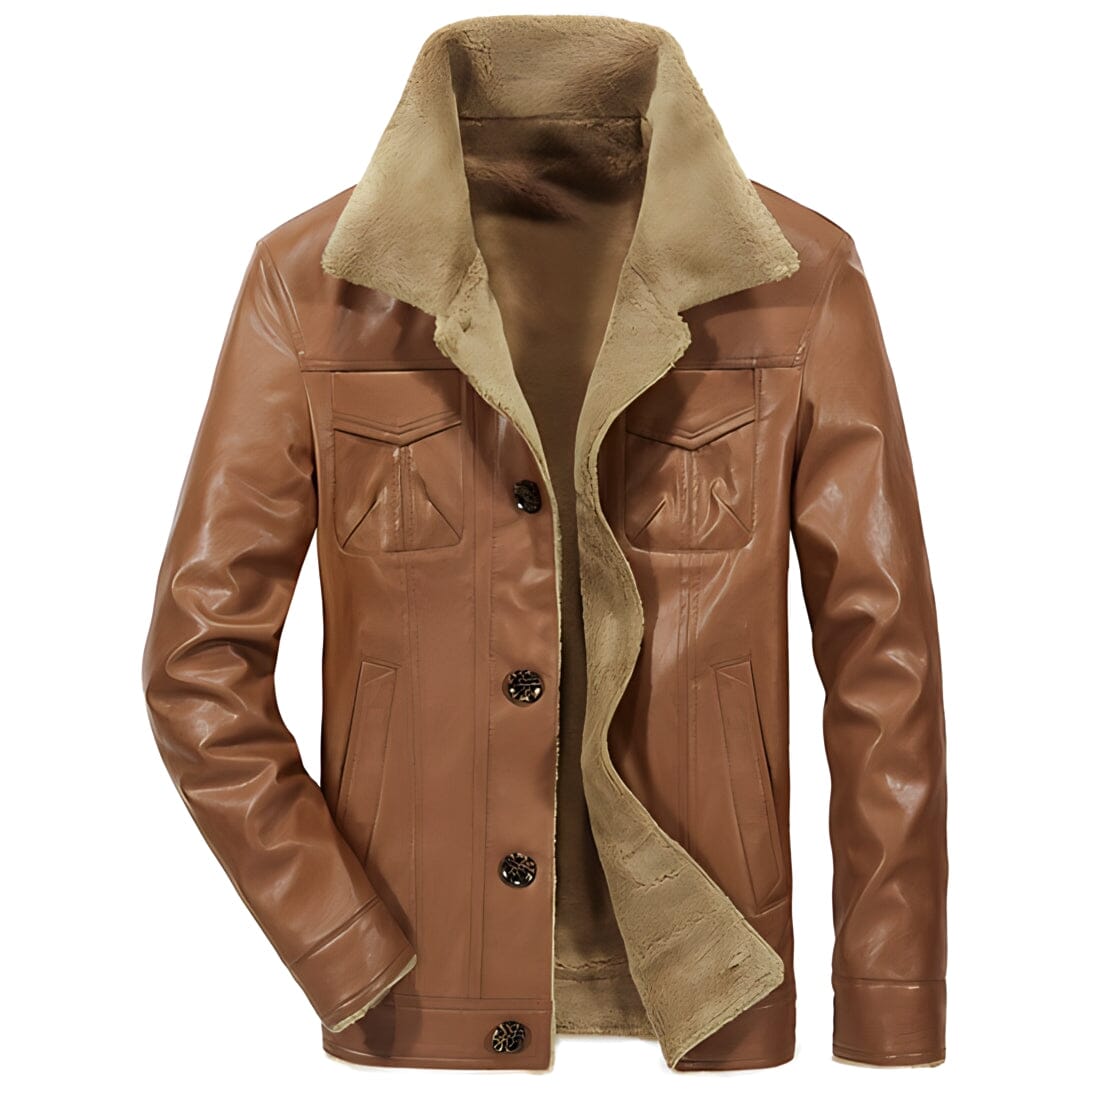 The Fox Winter Faux Leather Jacket - Multiple Colors 0 WM Studios Brown XS 